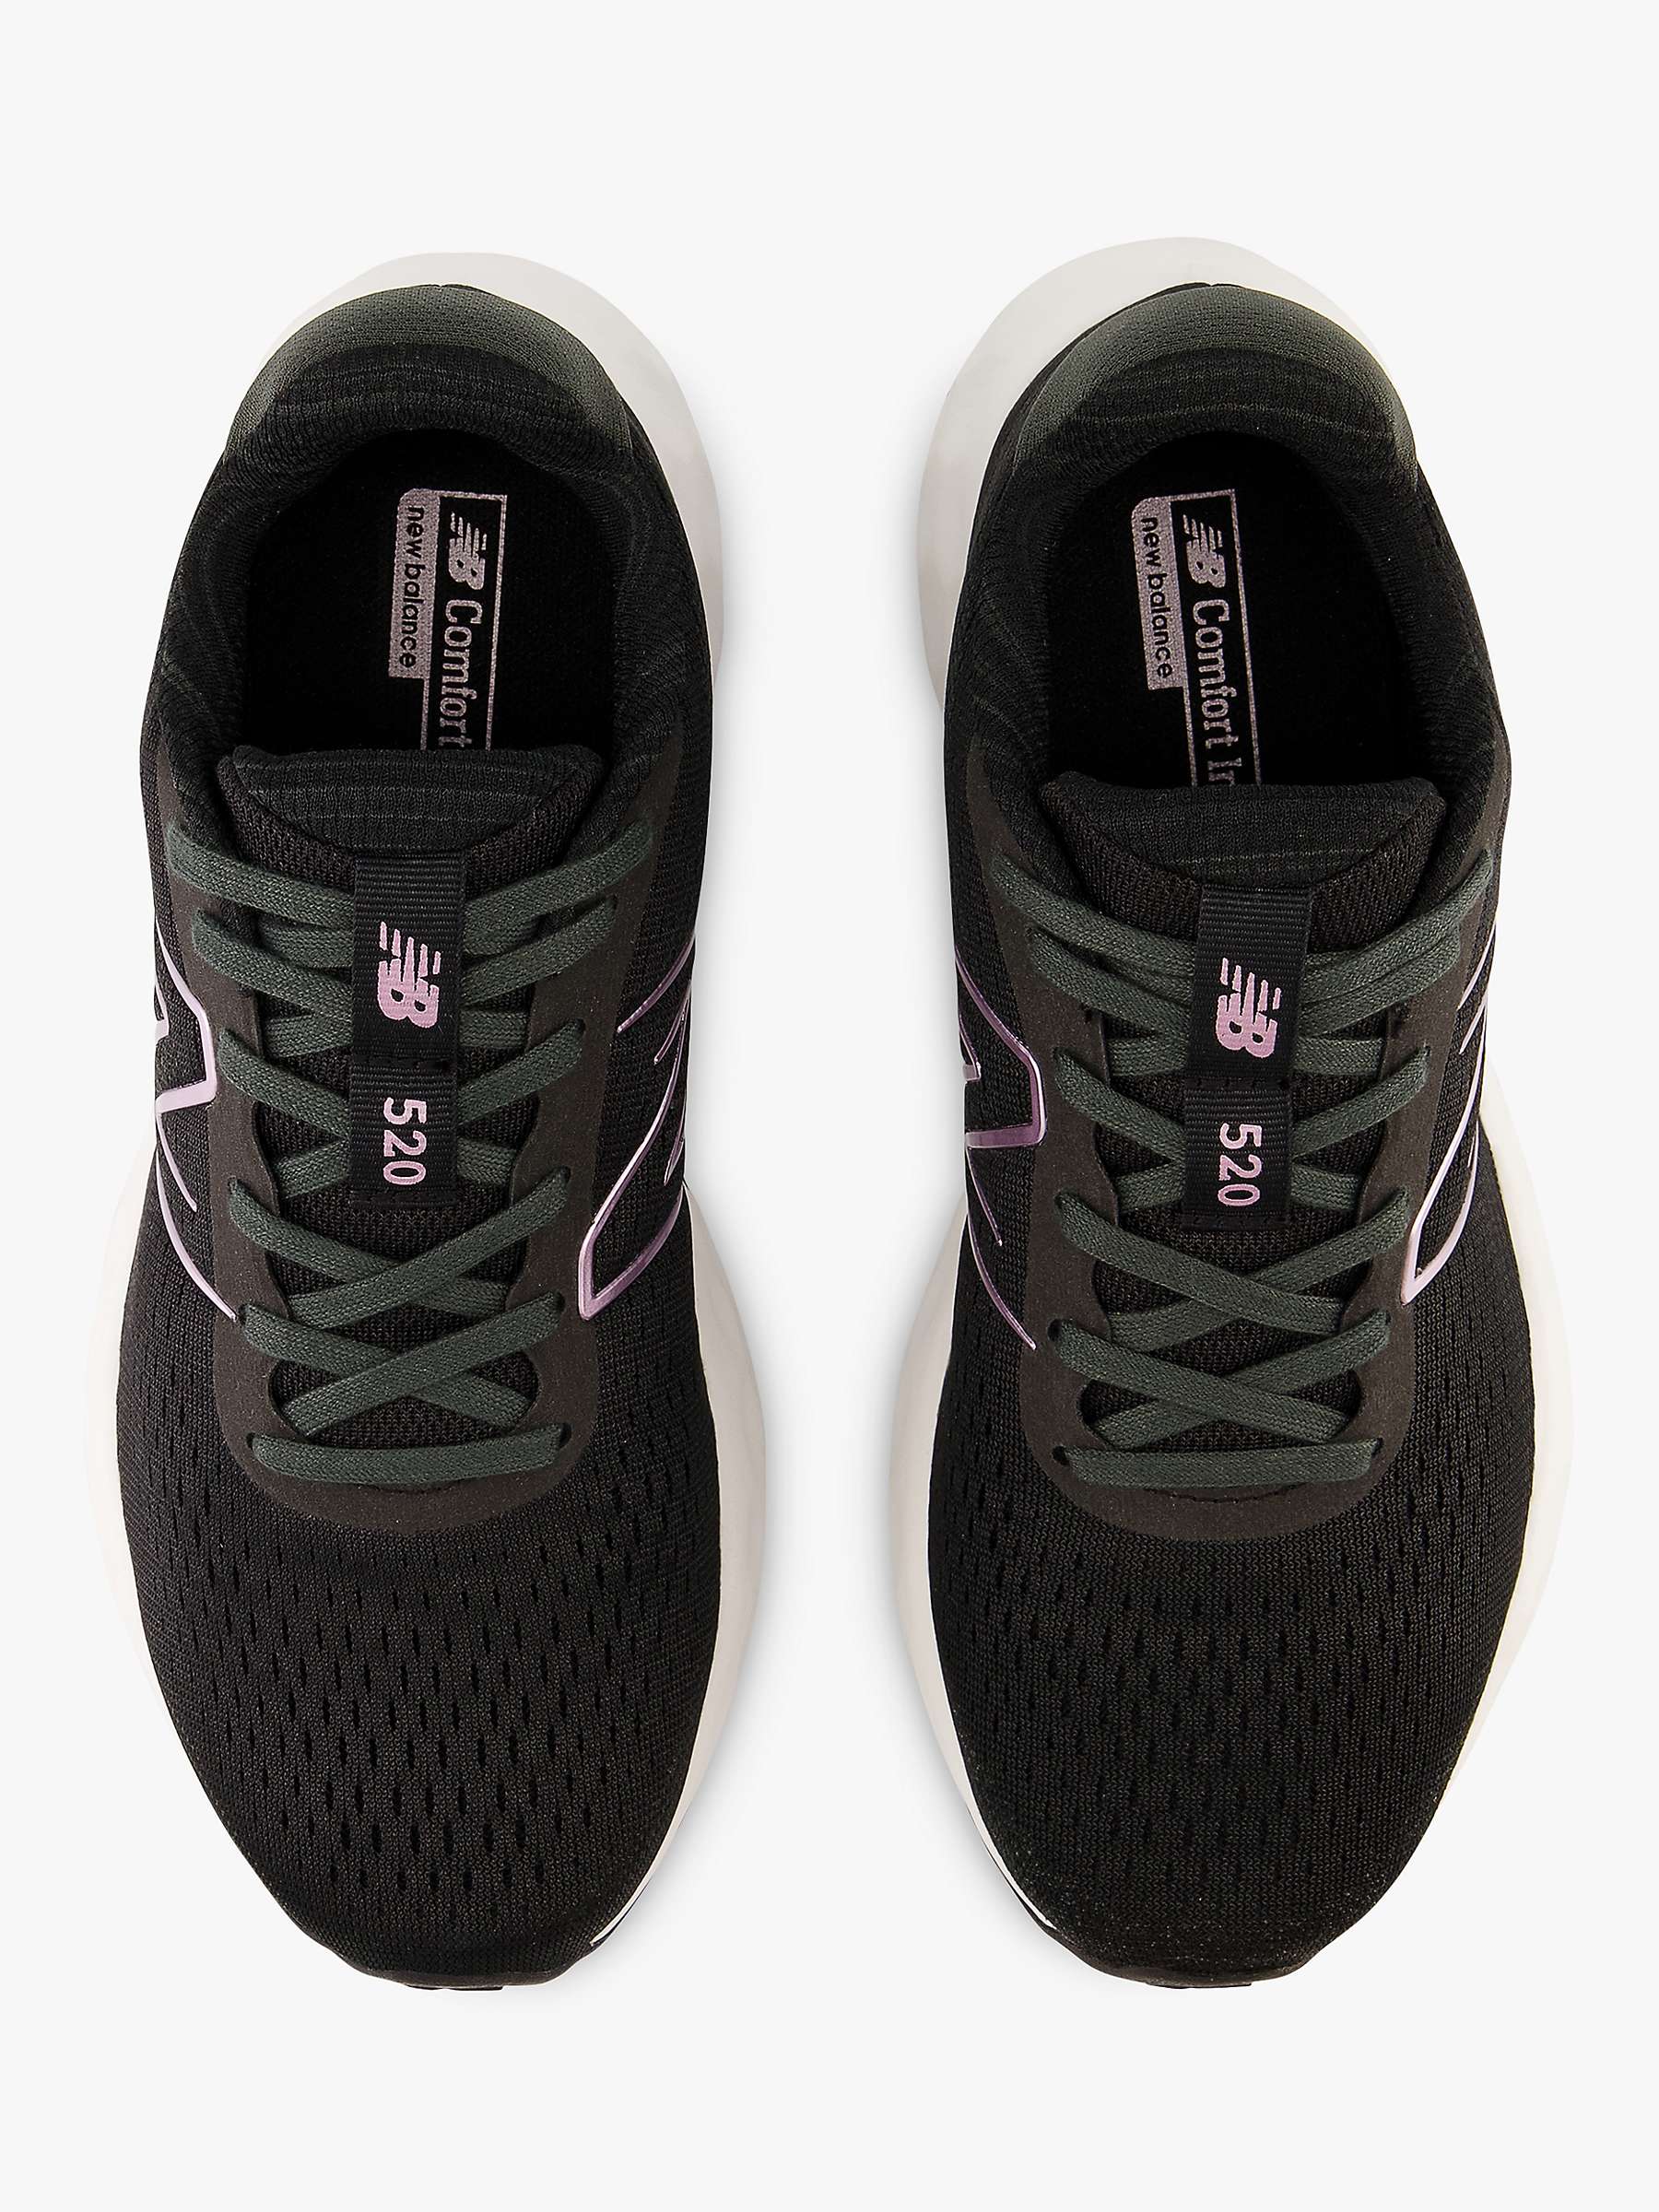 Buy New Balance 520v8 Women's Running Shoes Online at johnlewis.com